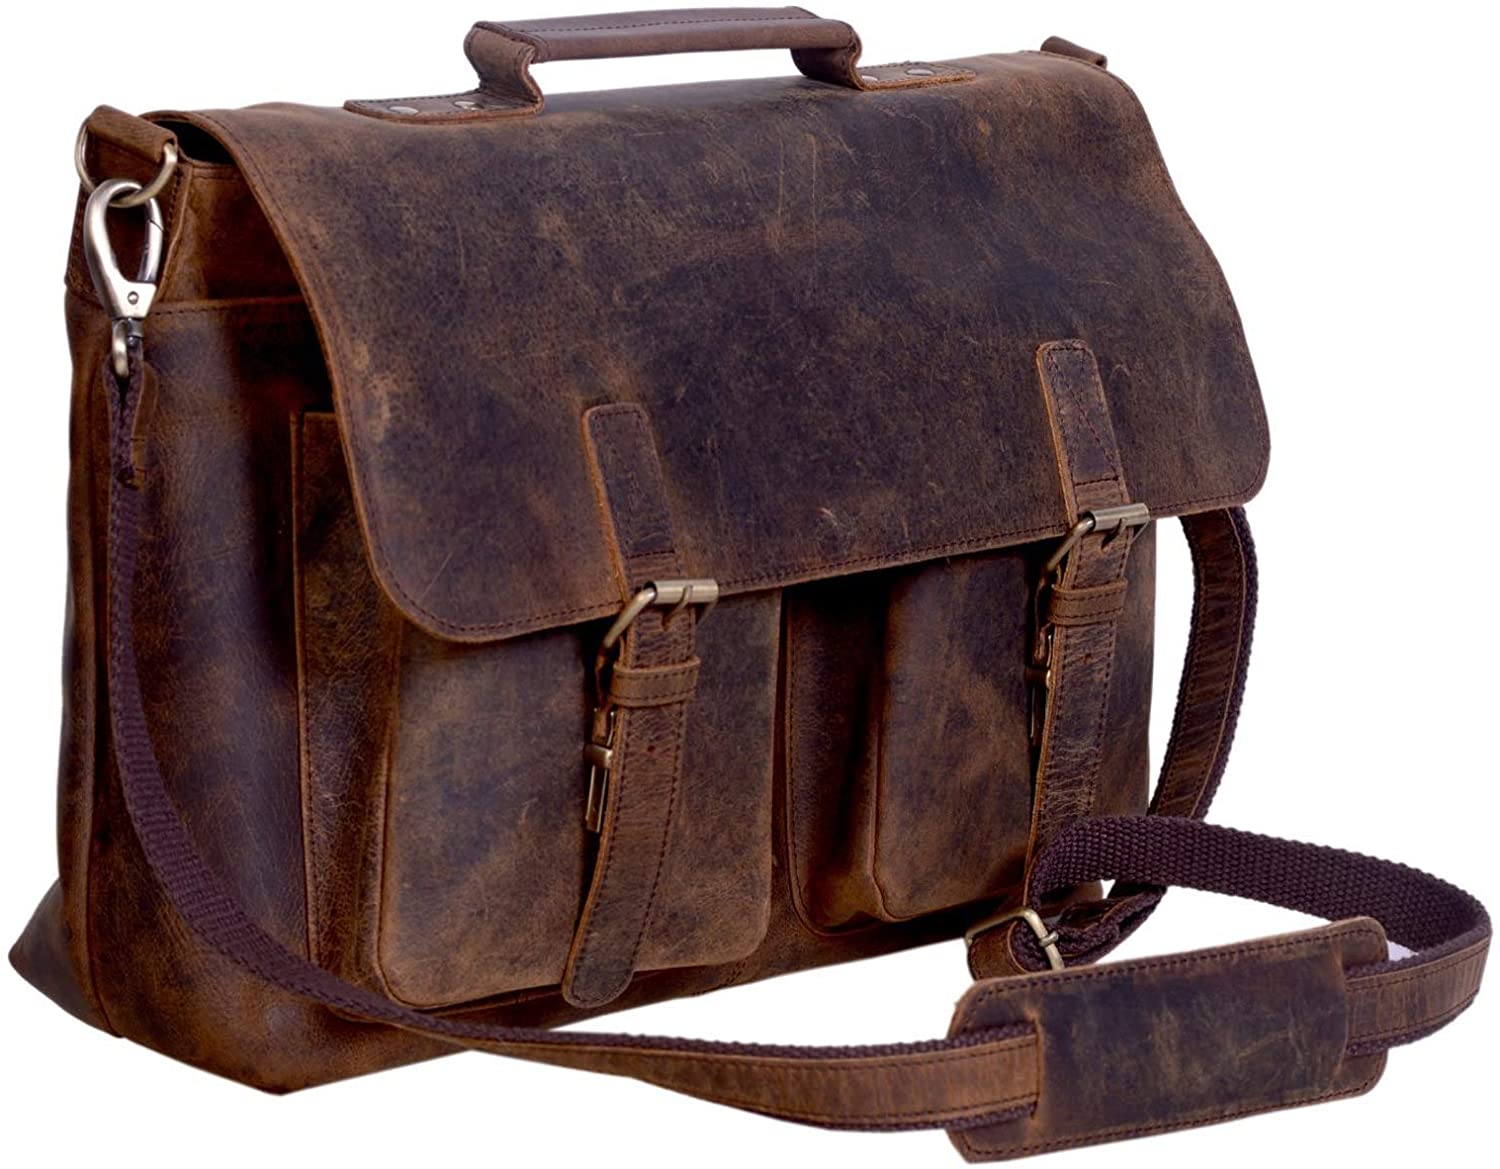 <strong>2. KomalC 16 Inch Buffalo Leather Briefcase Laptop Messenger Bag</strong>